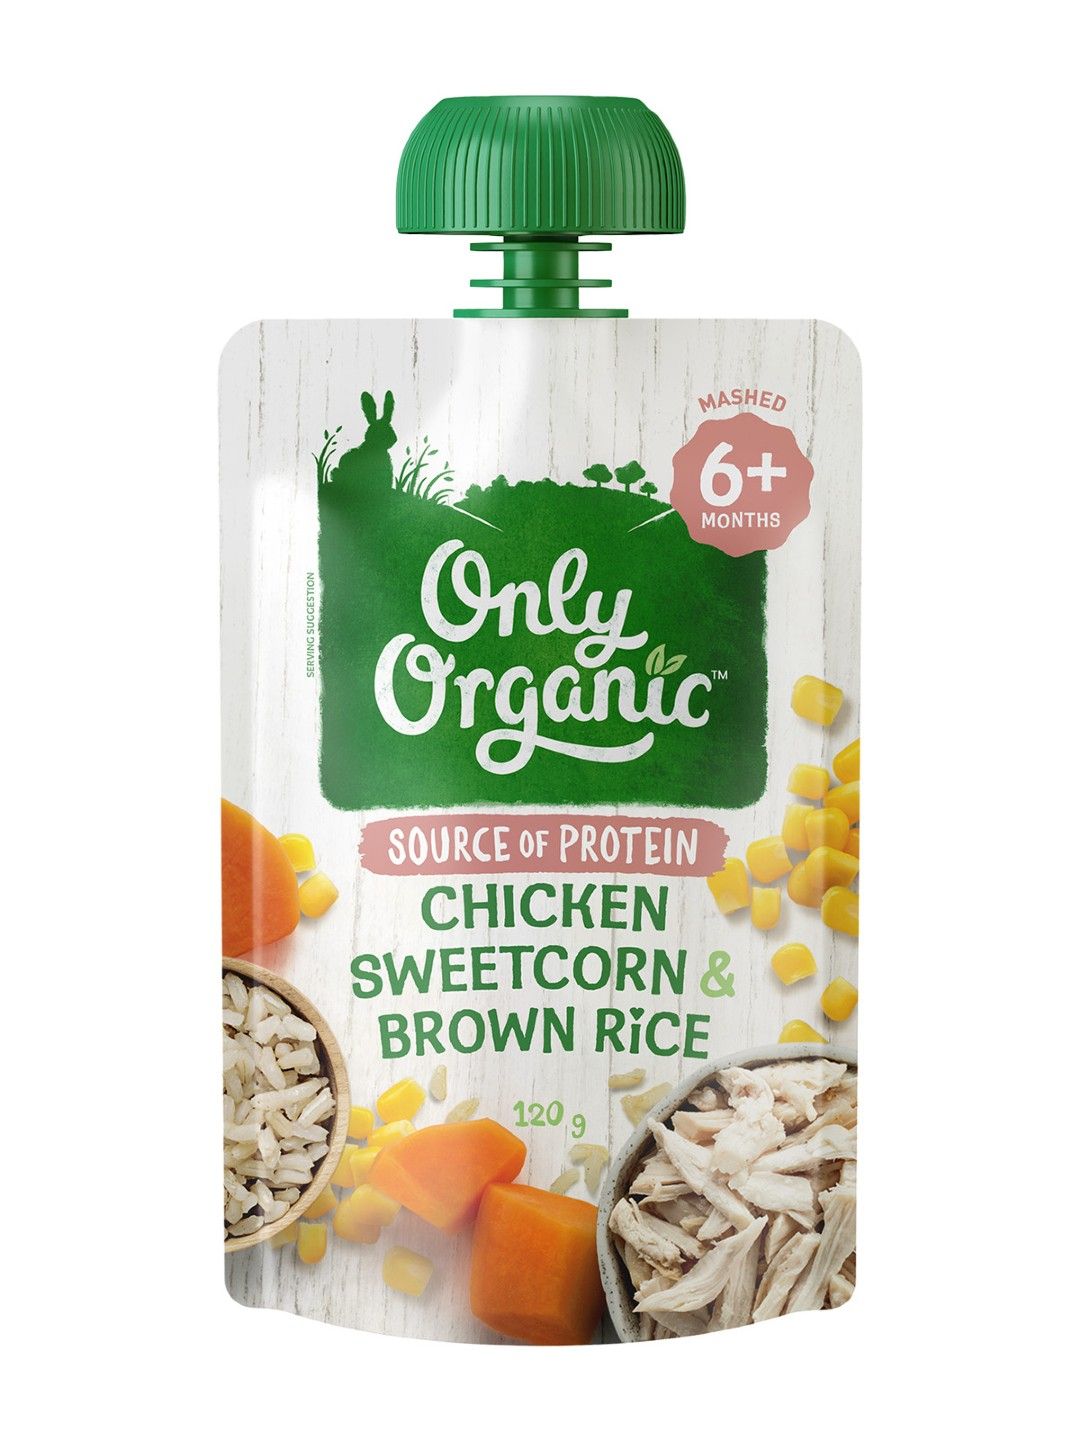 Only Organic Chicken Sweetcorn & Brown Rice (120g)